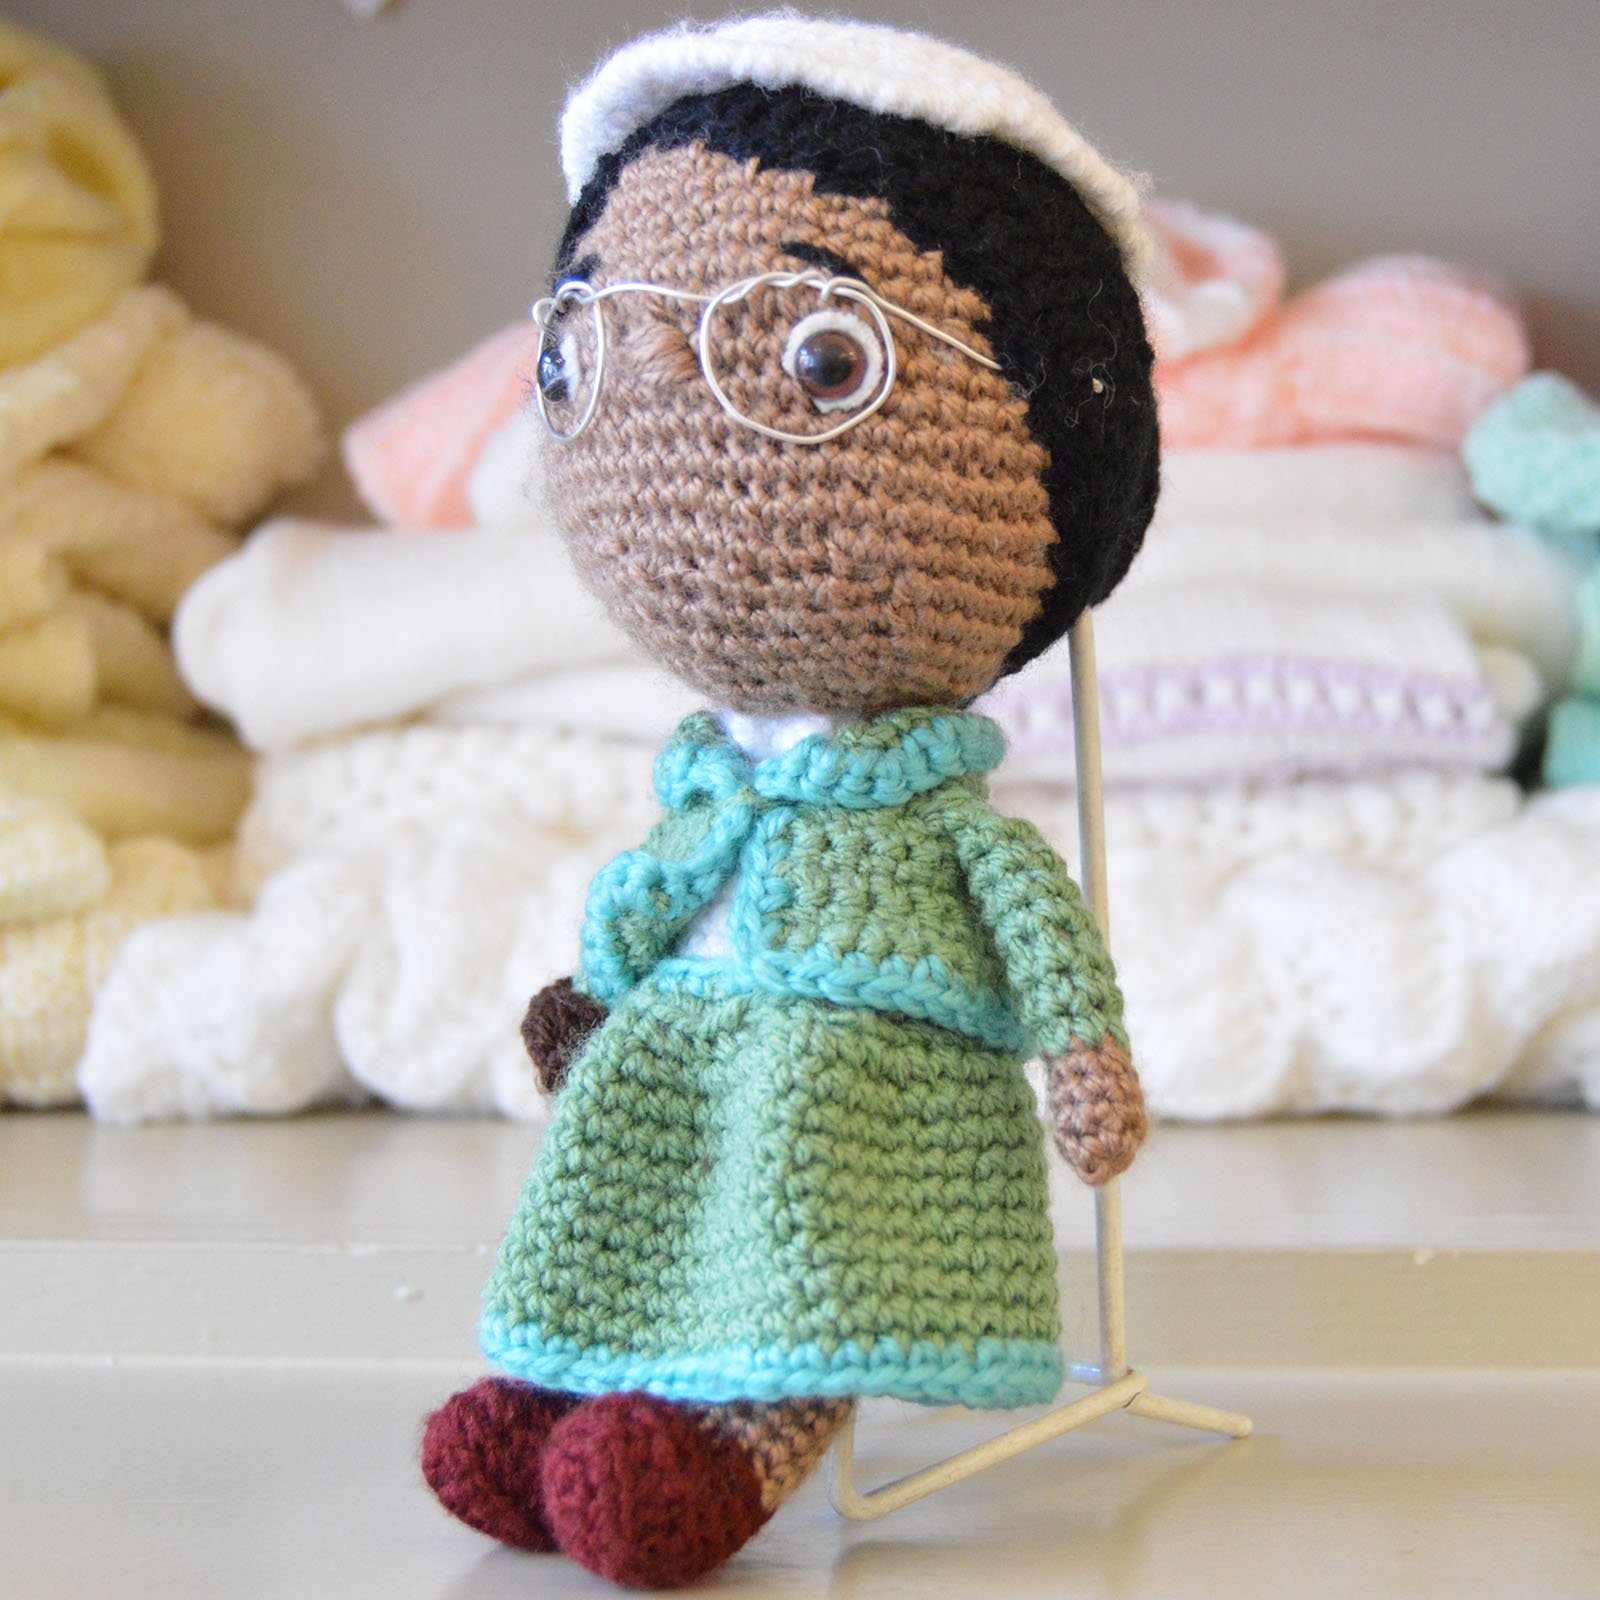 Hand made crochet Rosa Park doll